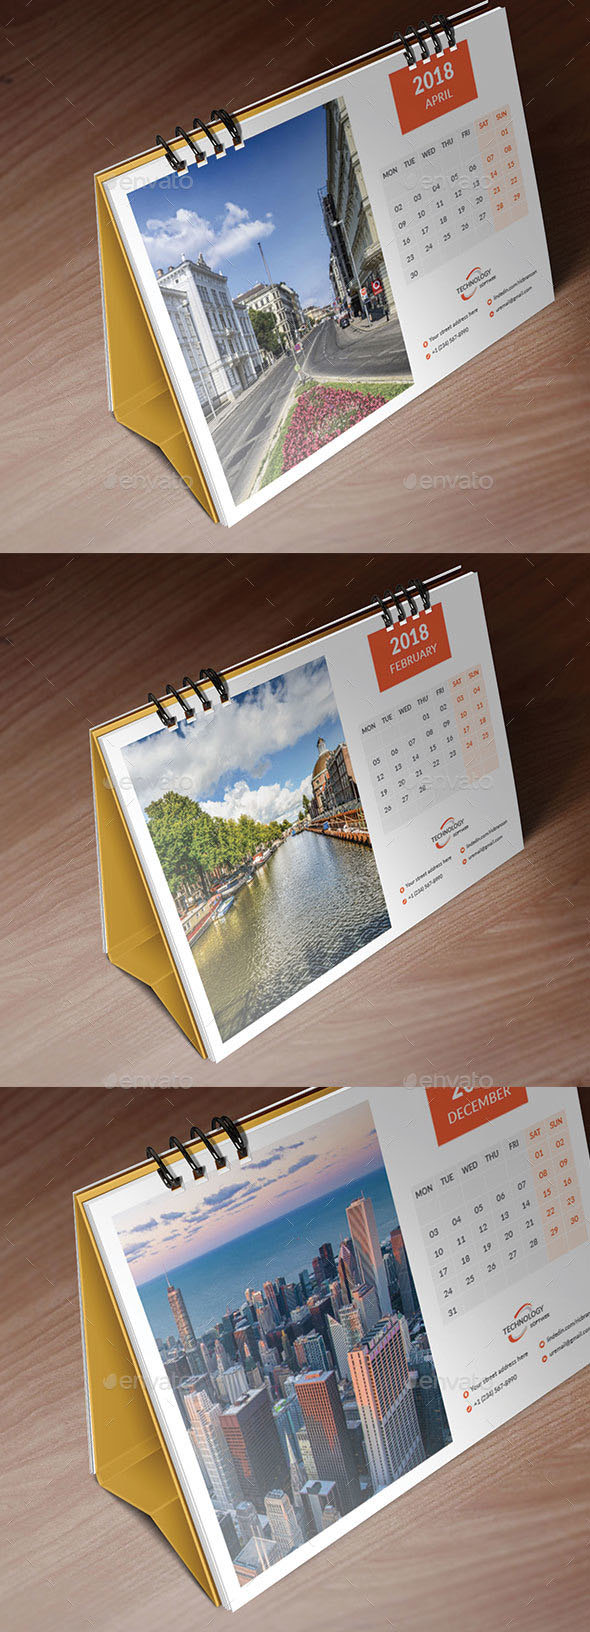 Desk Calendar Design 2018